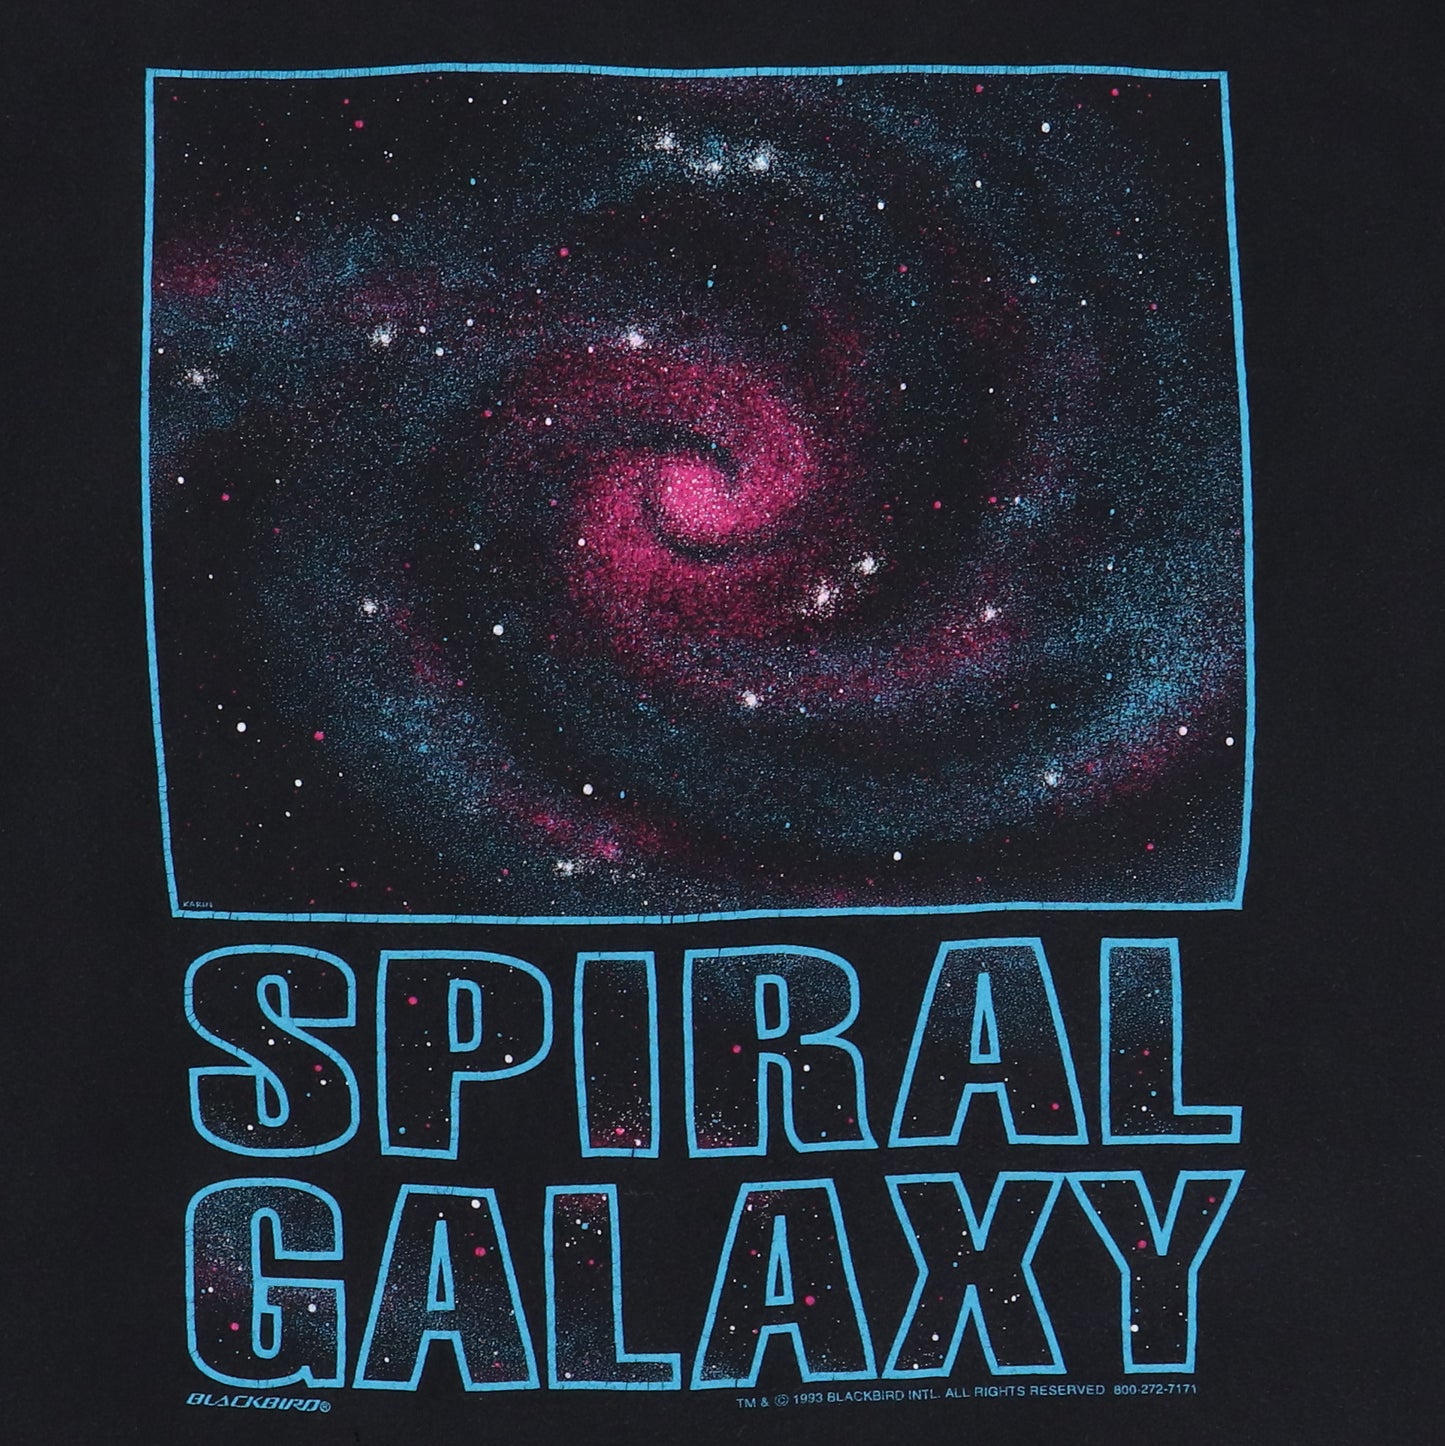 1993 Infinity Spiral Galaxy Shirt